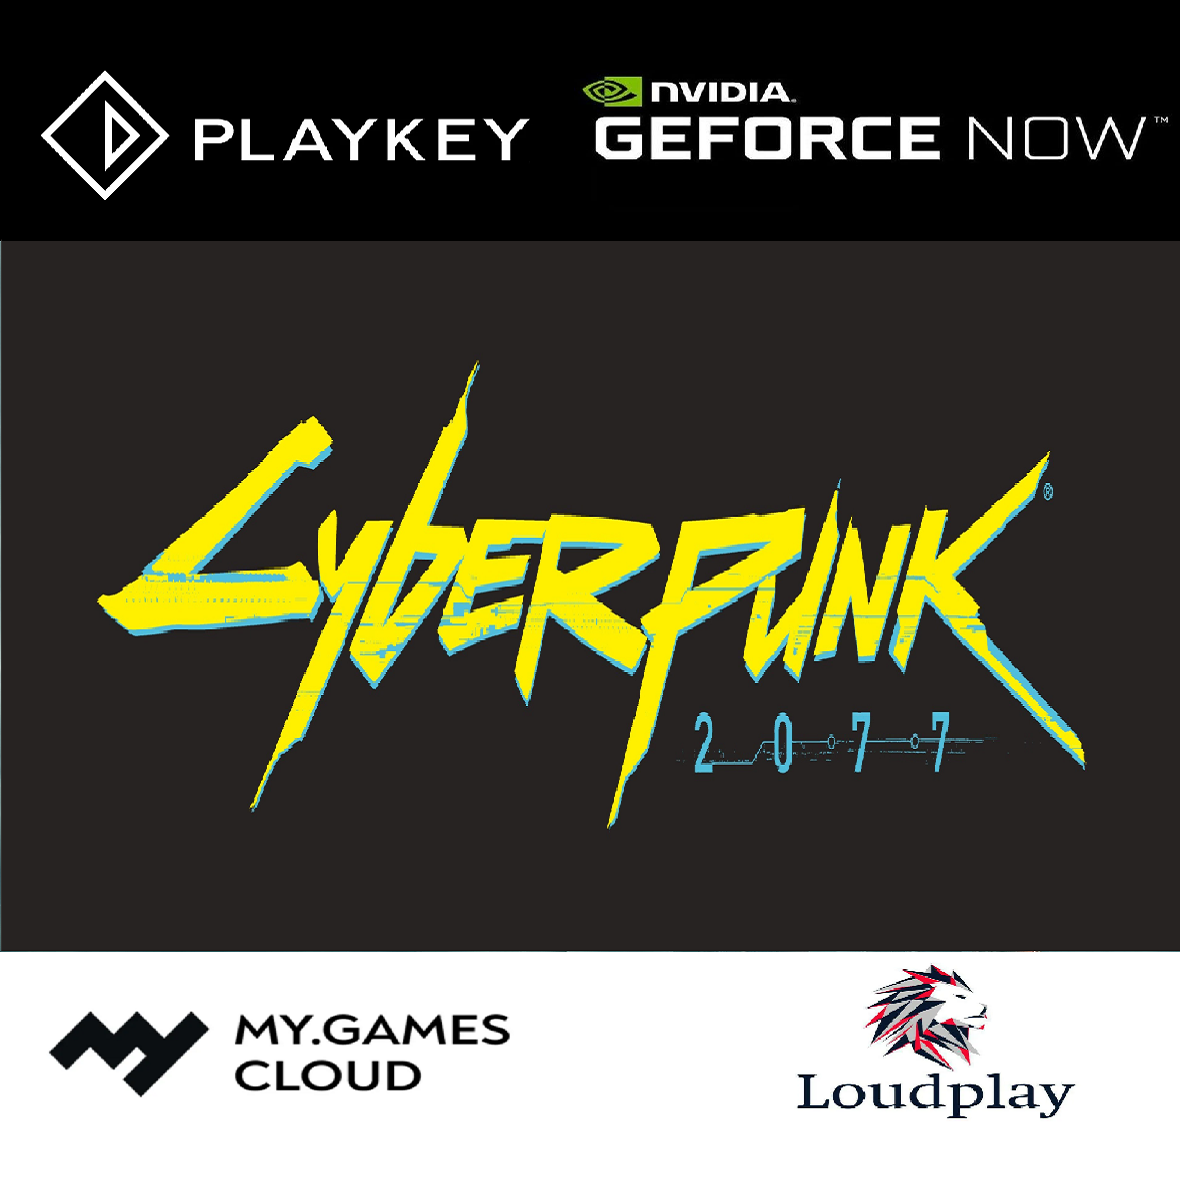 Купить 💻 Cyberpunk 2077 ✅ ДЛЯ GFN (Geforce Now) / Play Key